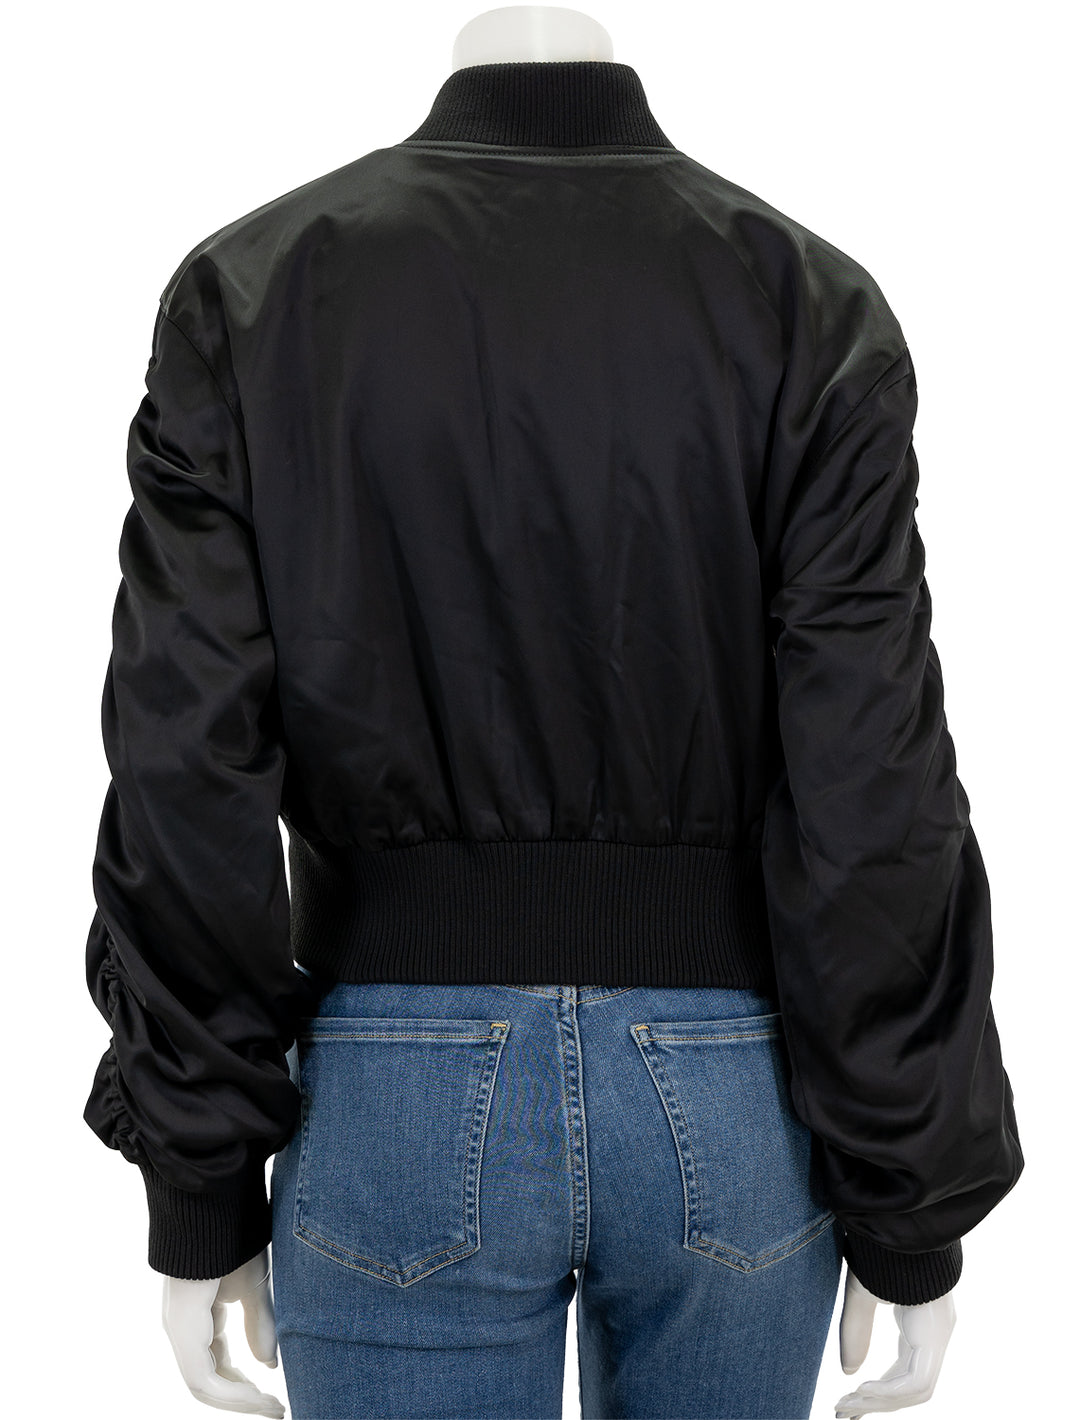 Back view of Steve Madden's costa jacket in black.